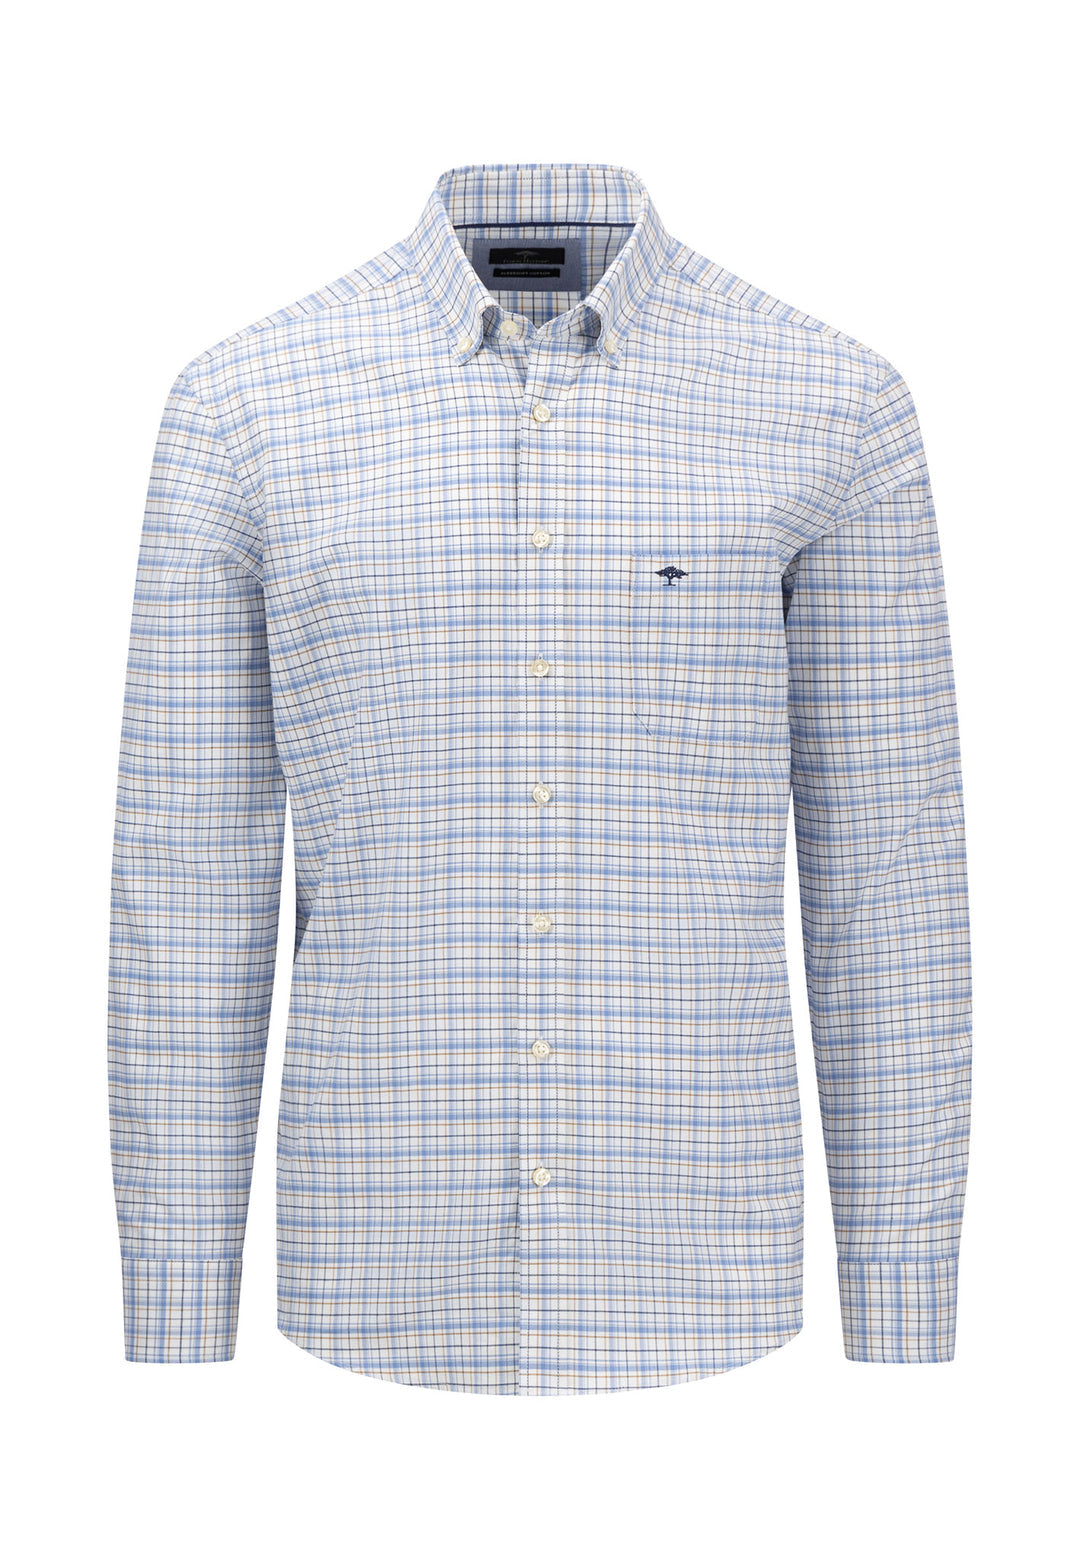 Fynch-Hatton Oxford Check Shirt